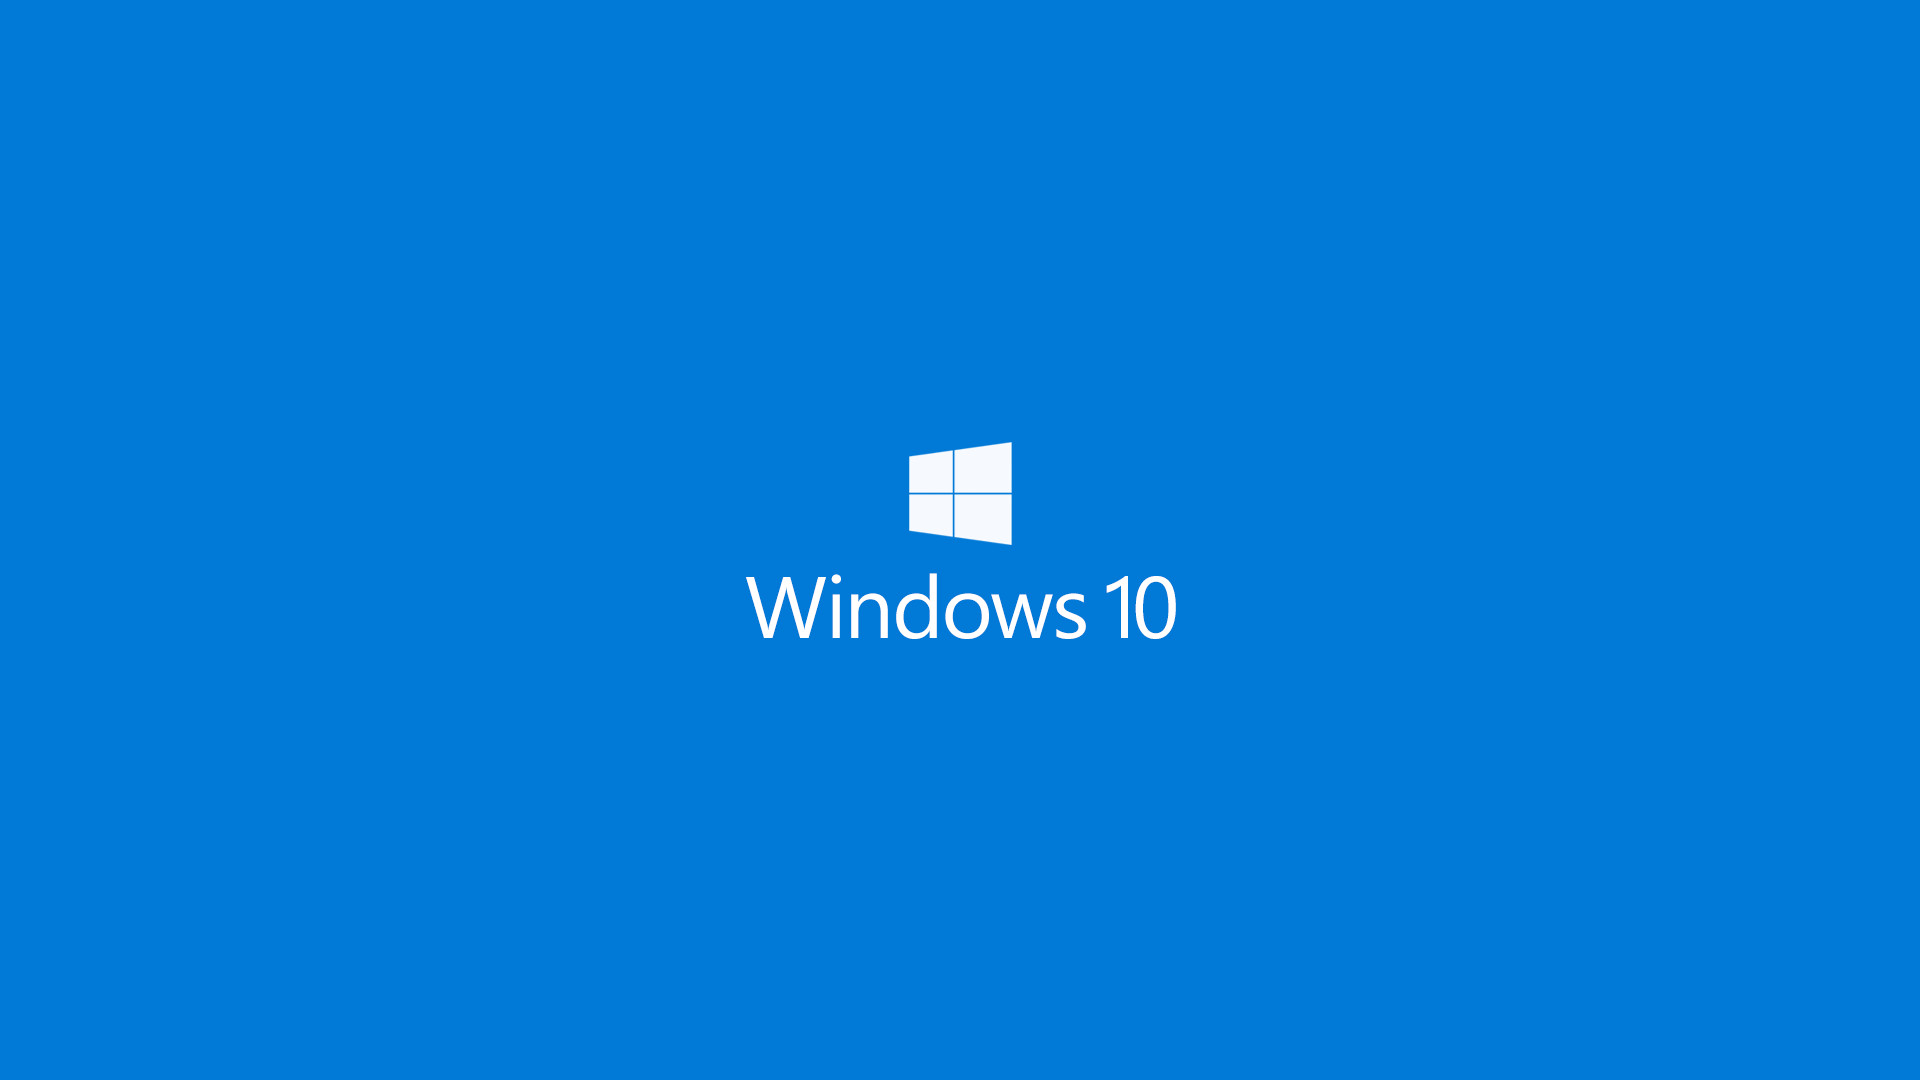 Windows 10 Wallpaper 1920x1080 75 Images